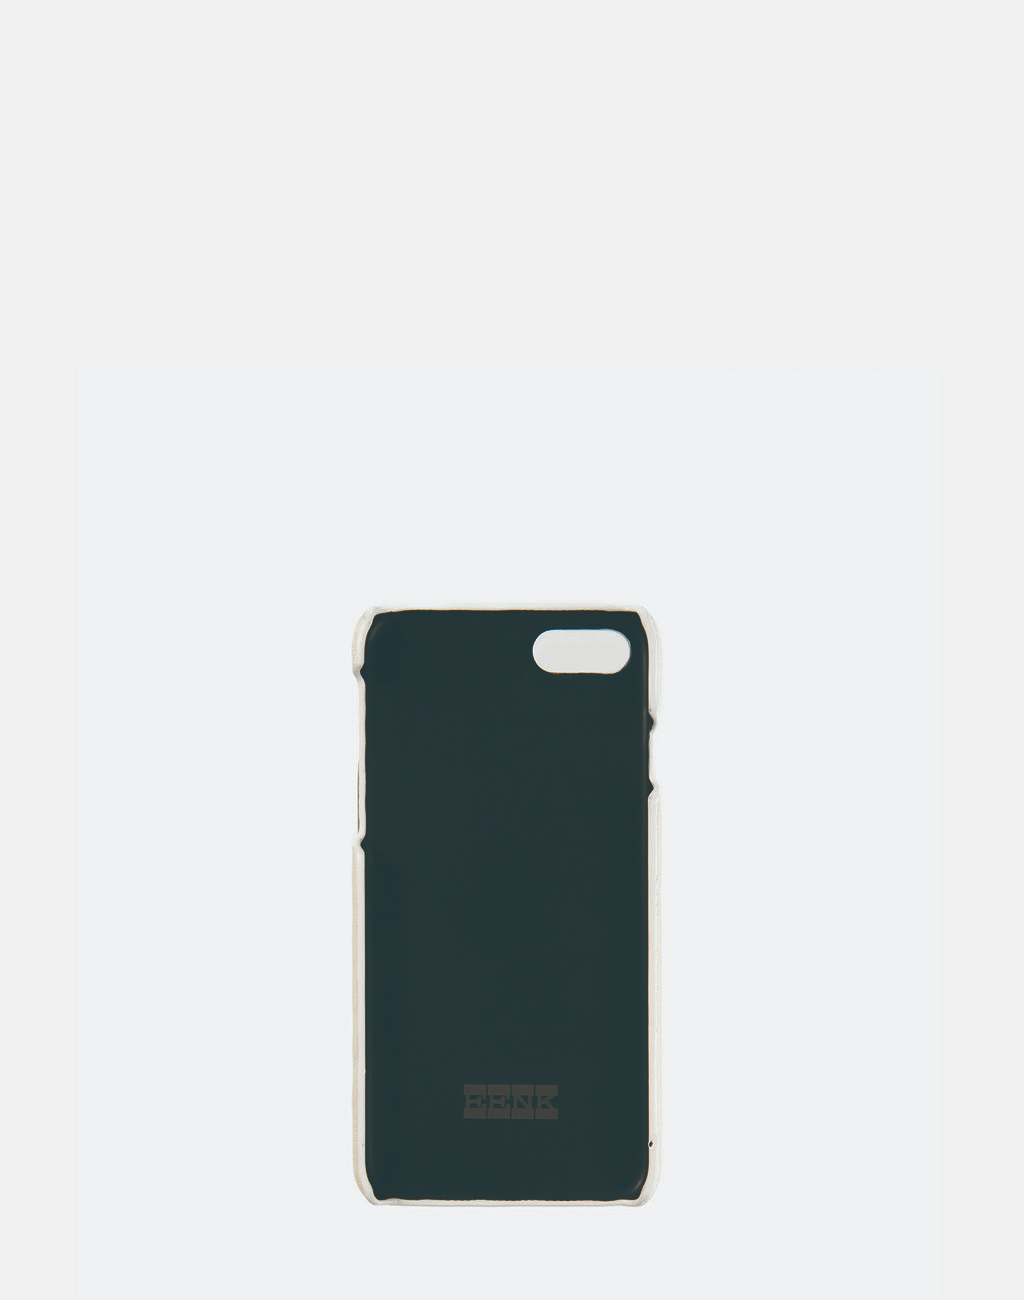 Iphone 7 / 8 Case Liney New Ivory 